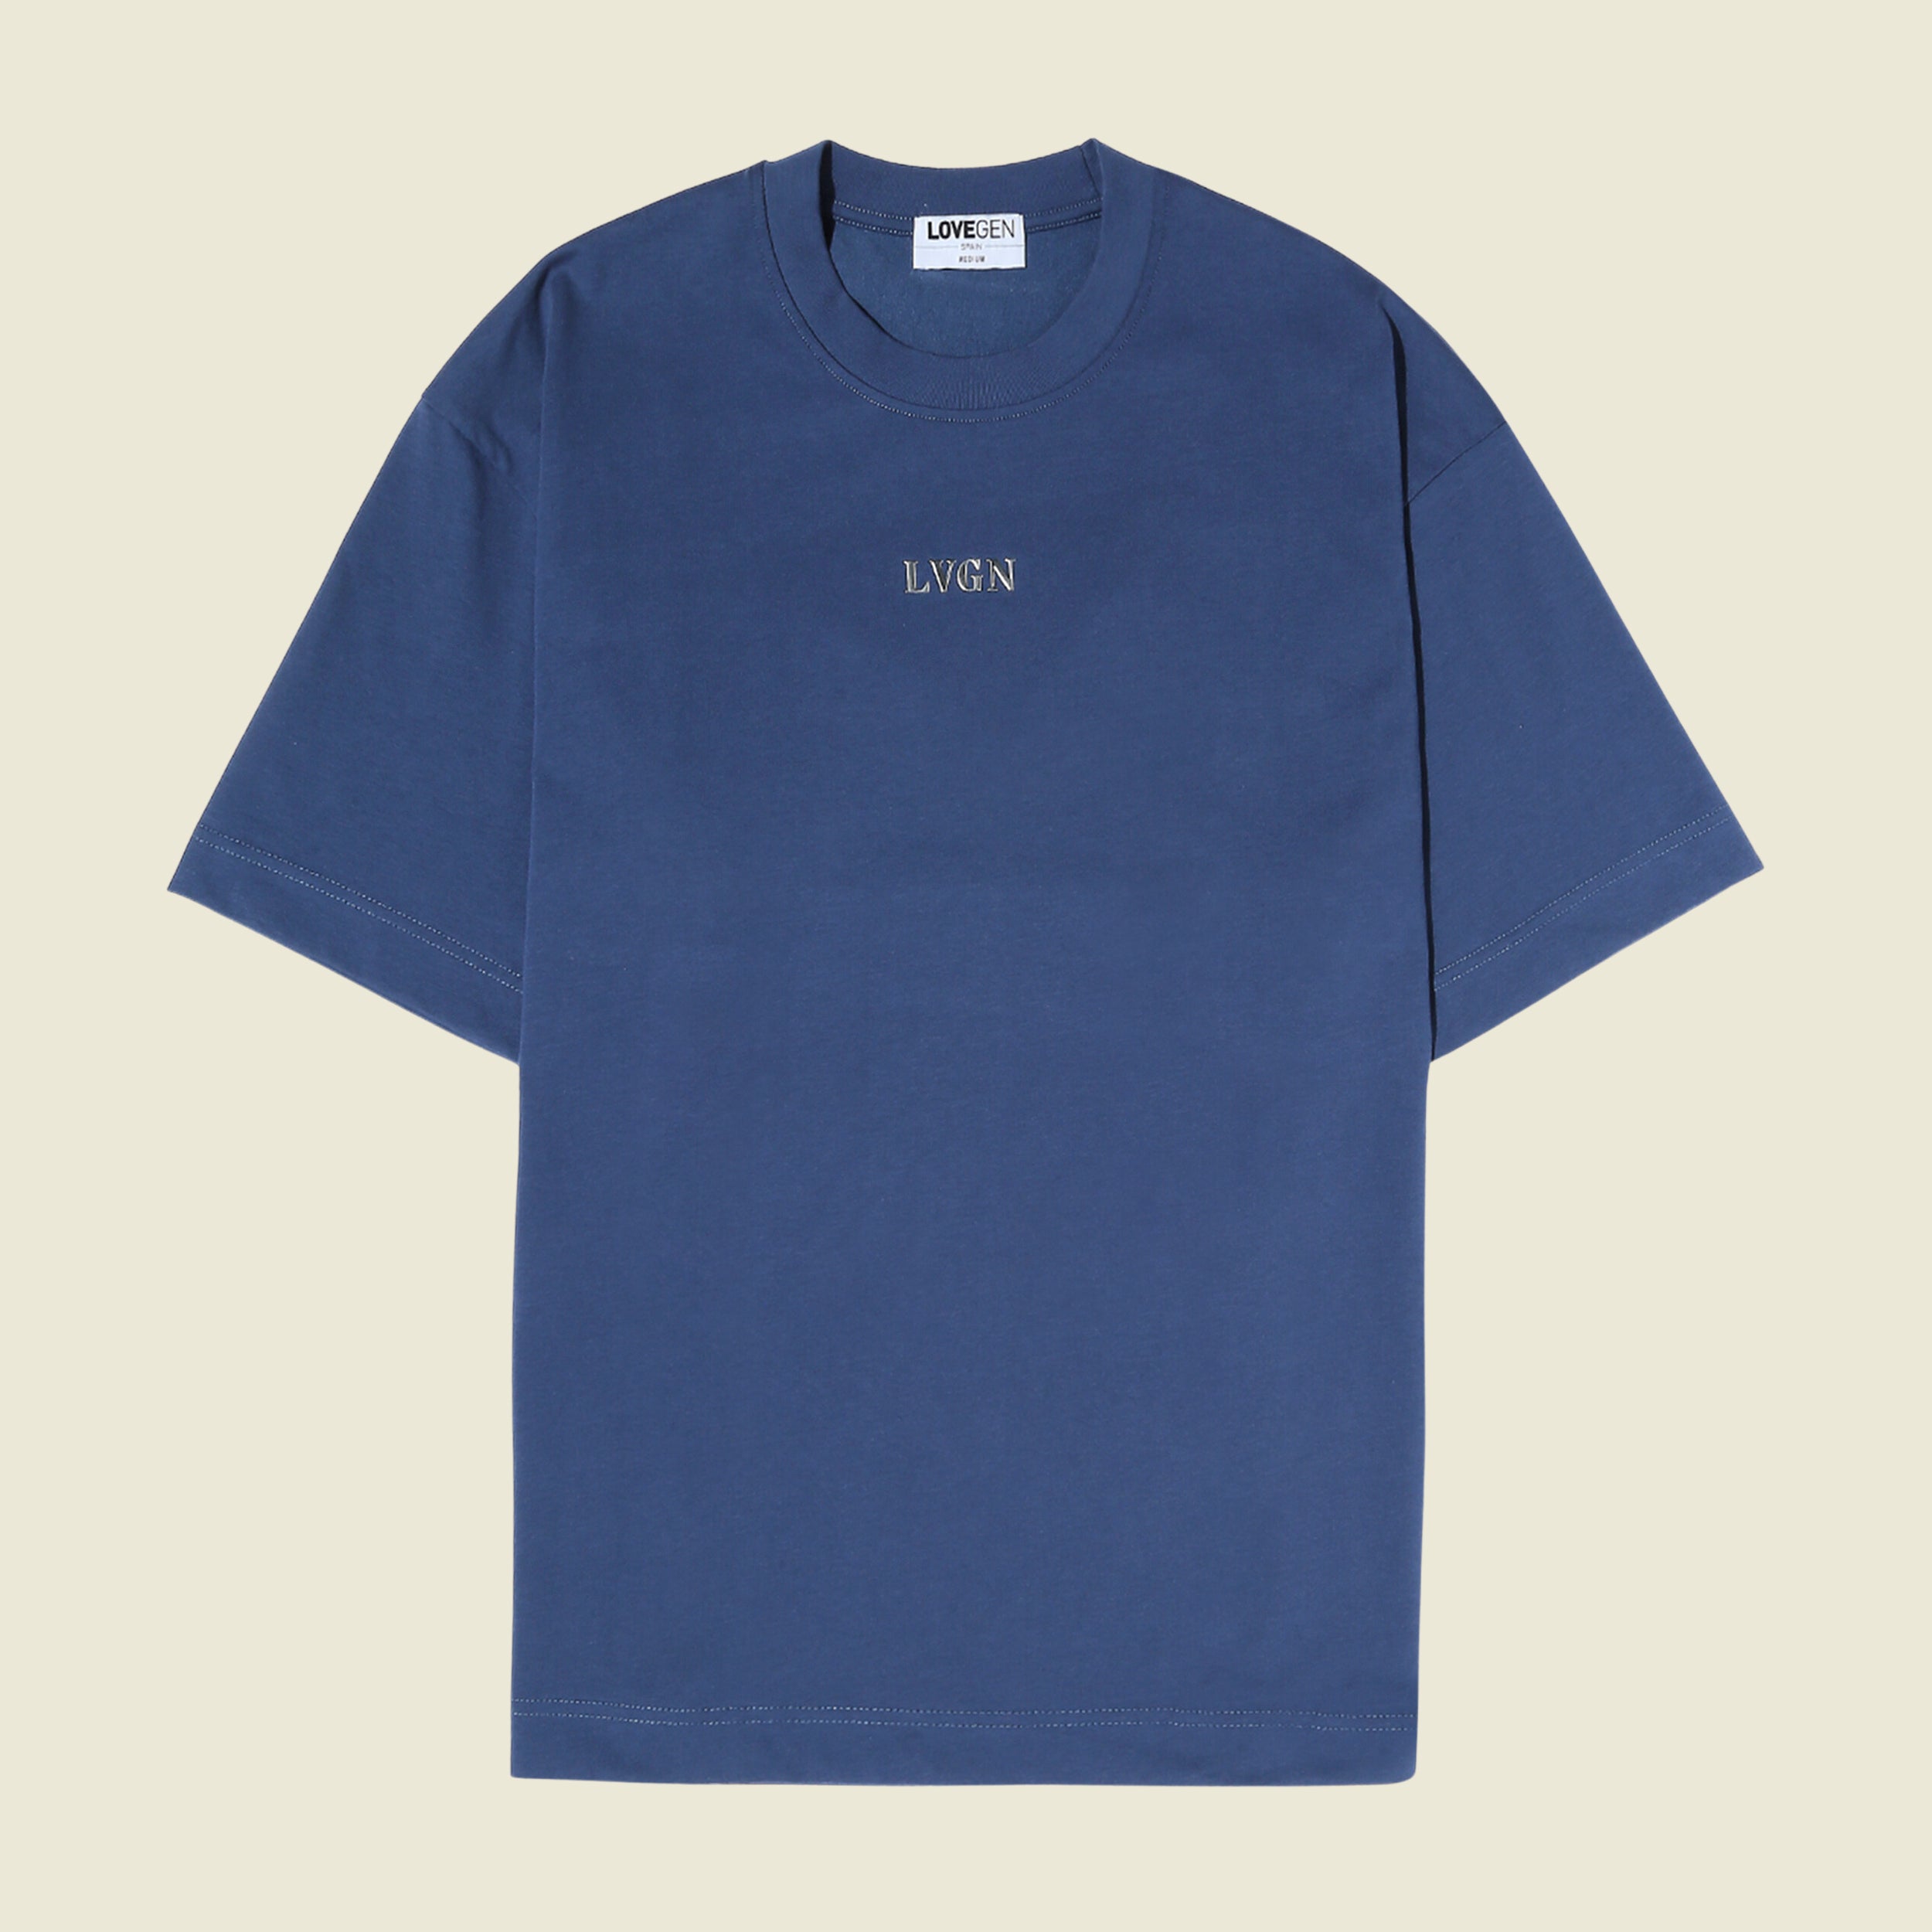 Blue Oversized T-Shirt